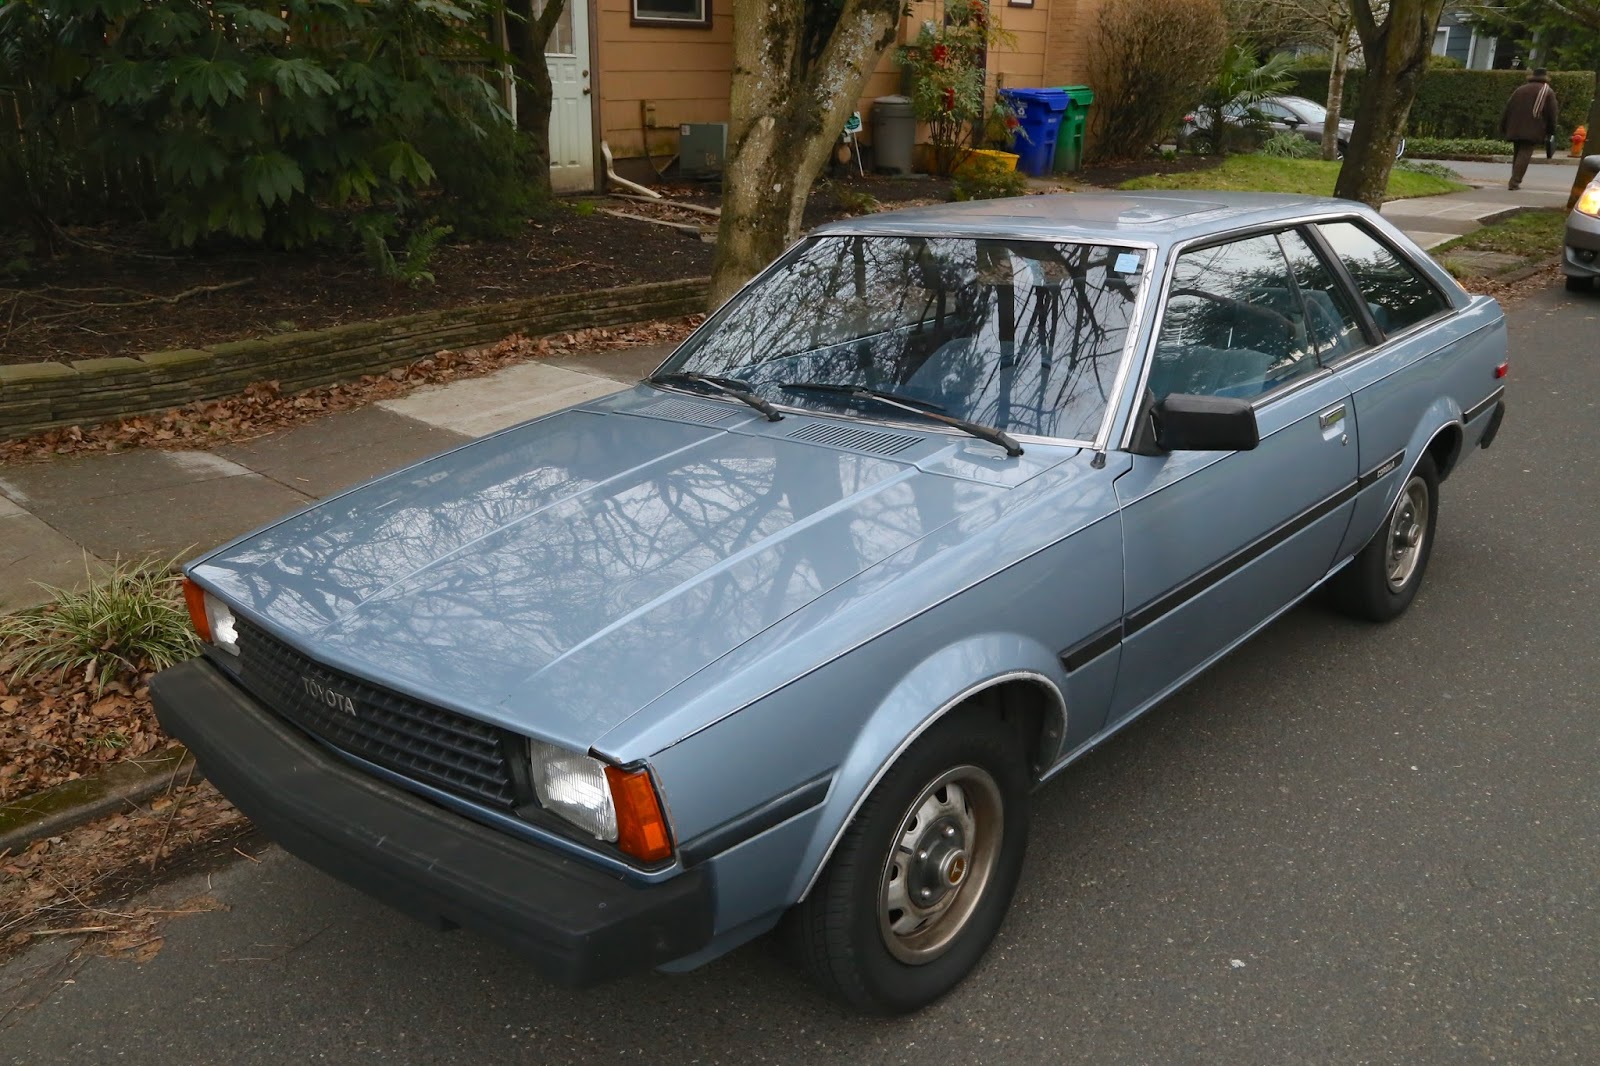 OLD PARKED CARS.: 1982 Toyota Corolla Liftback.